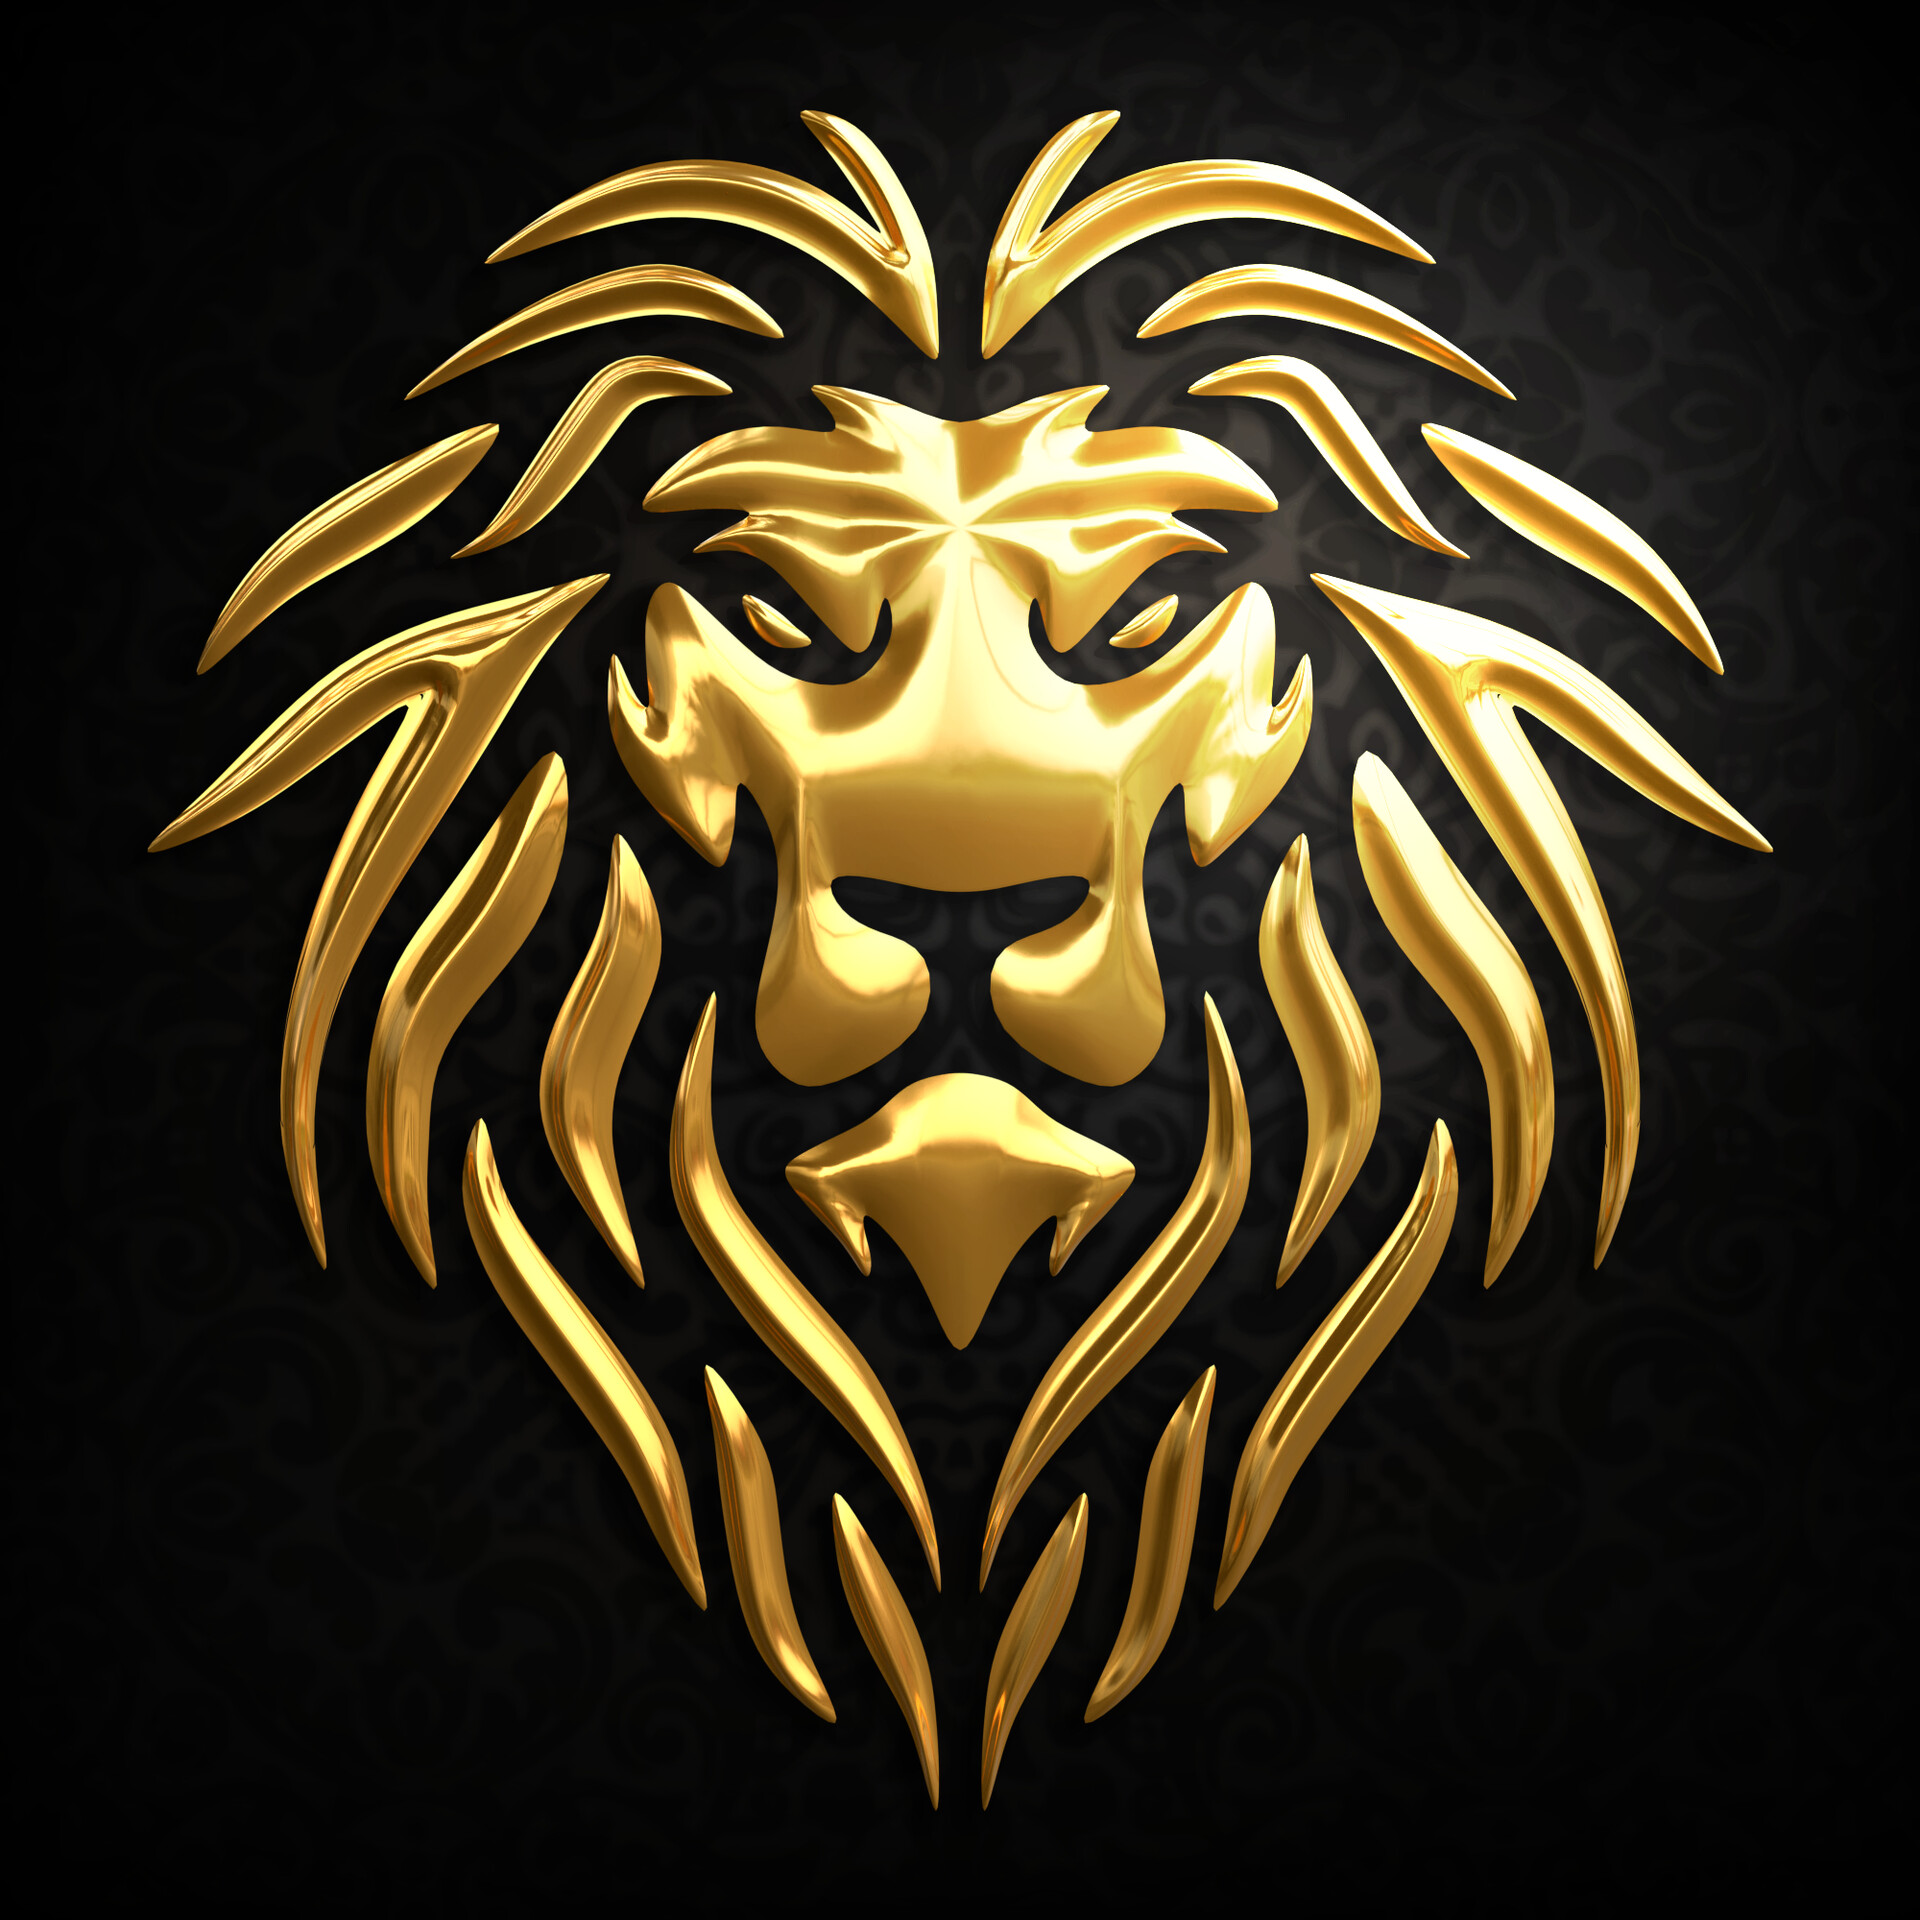 Gold Lion African Line Art logo Idea by Jenggot Merah on Dribbble